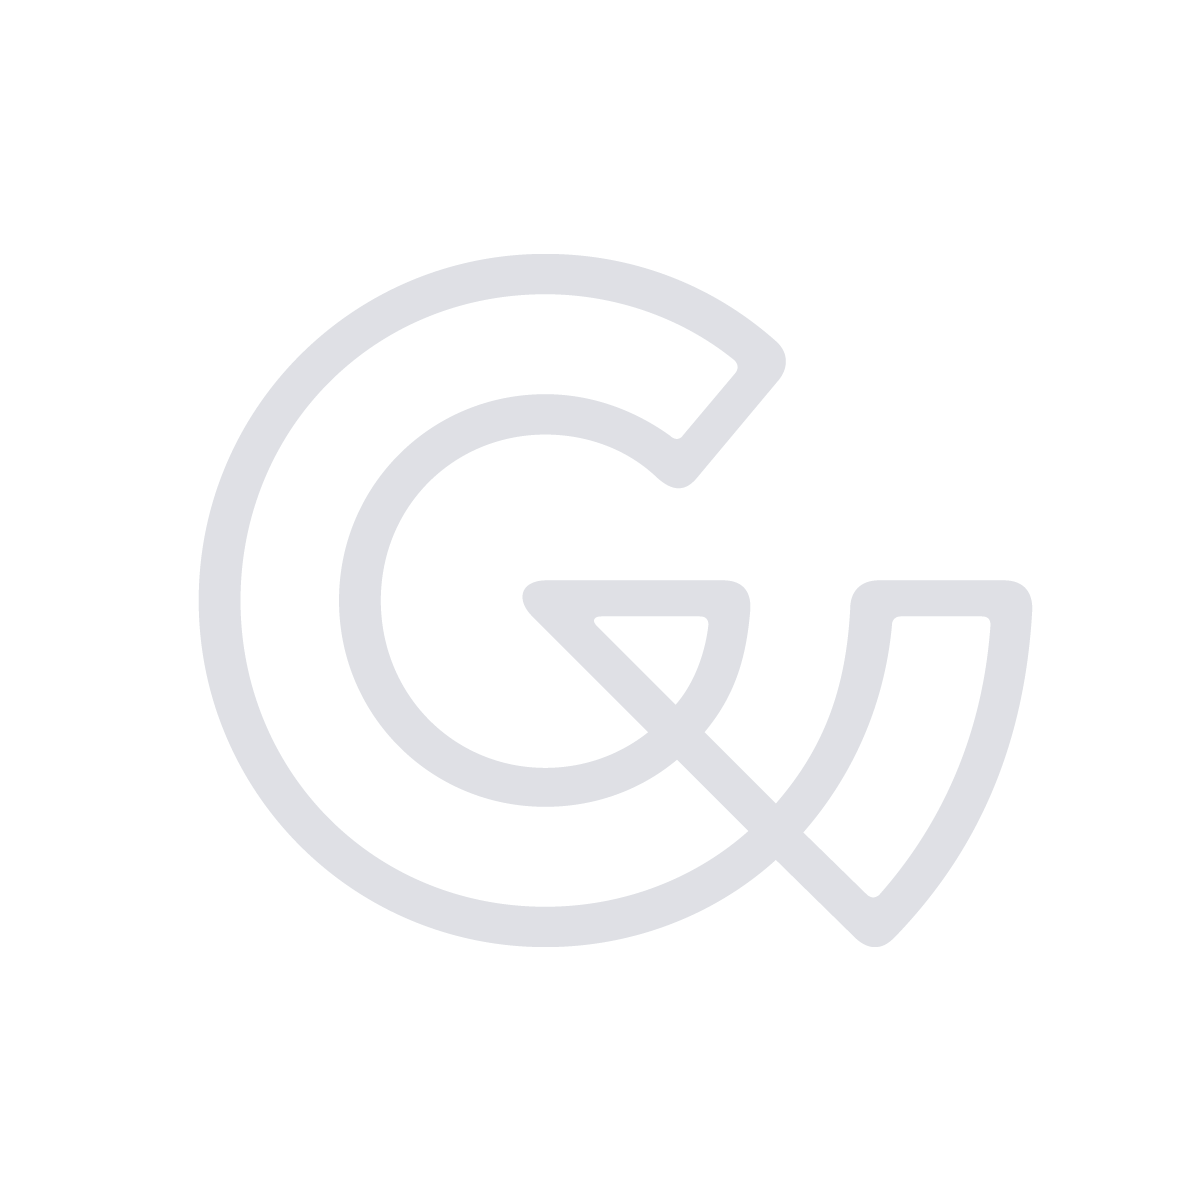 Grayscale's Logo